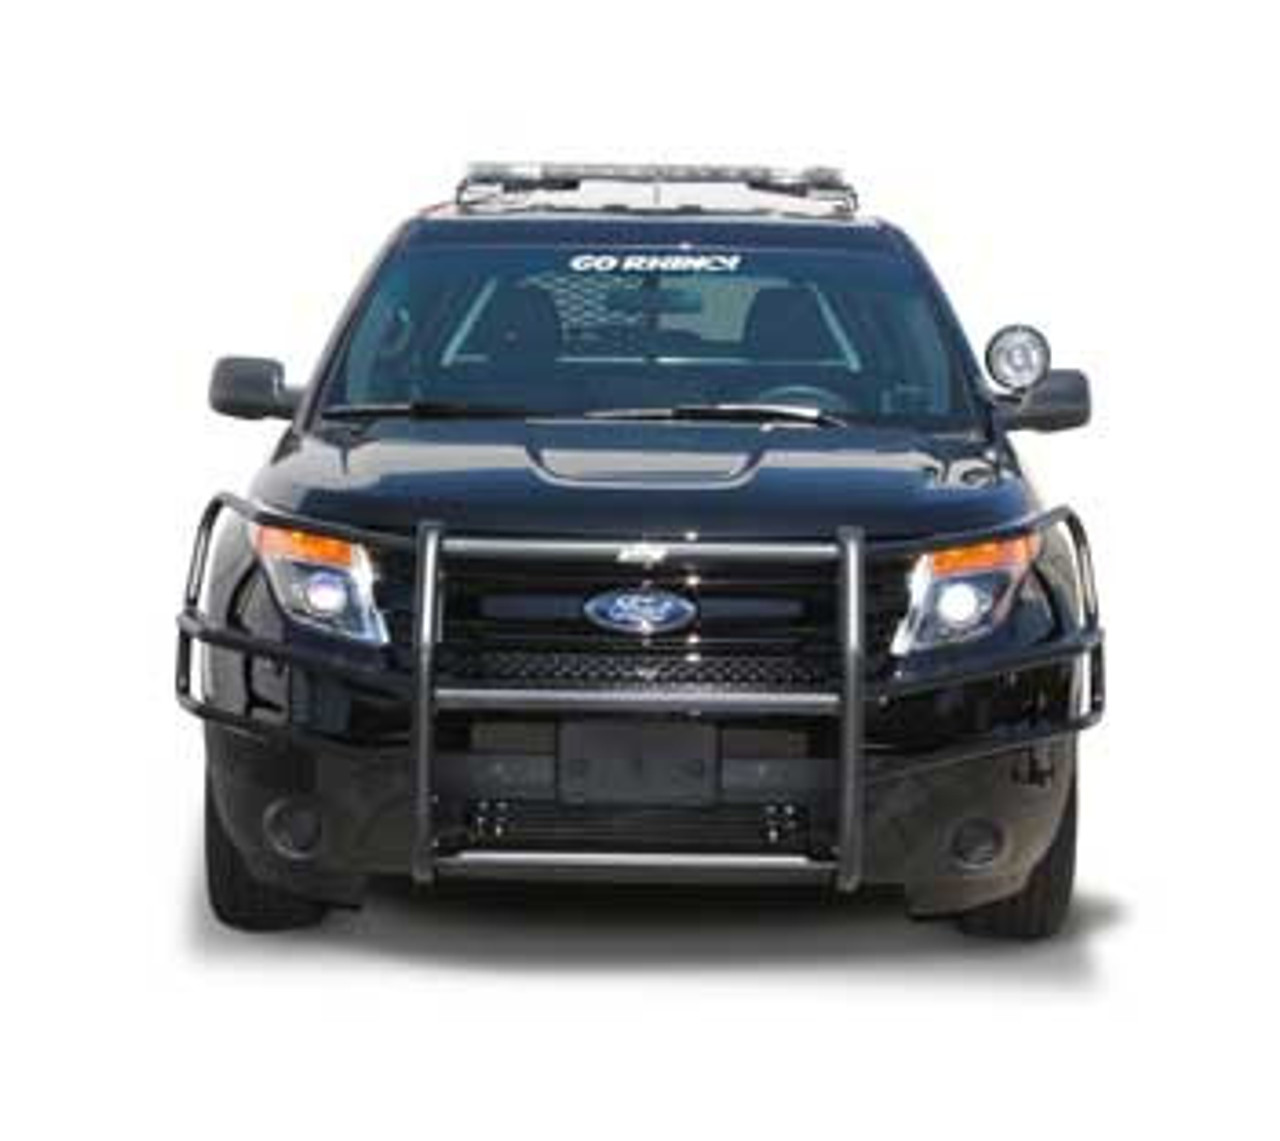 Go Rhino 5340WHDT Heavy Duty Wraps for Ford Law Enforcement Interceptor Utility SUV (Explorer) 2013-2015, Textured